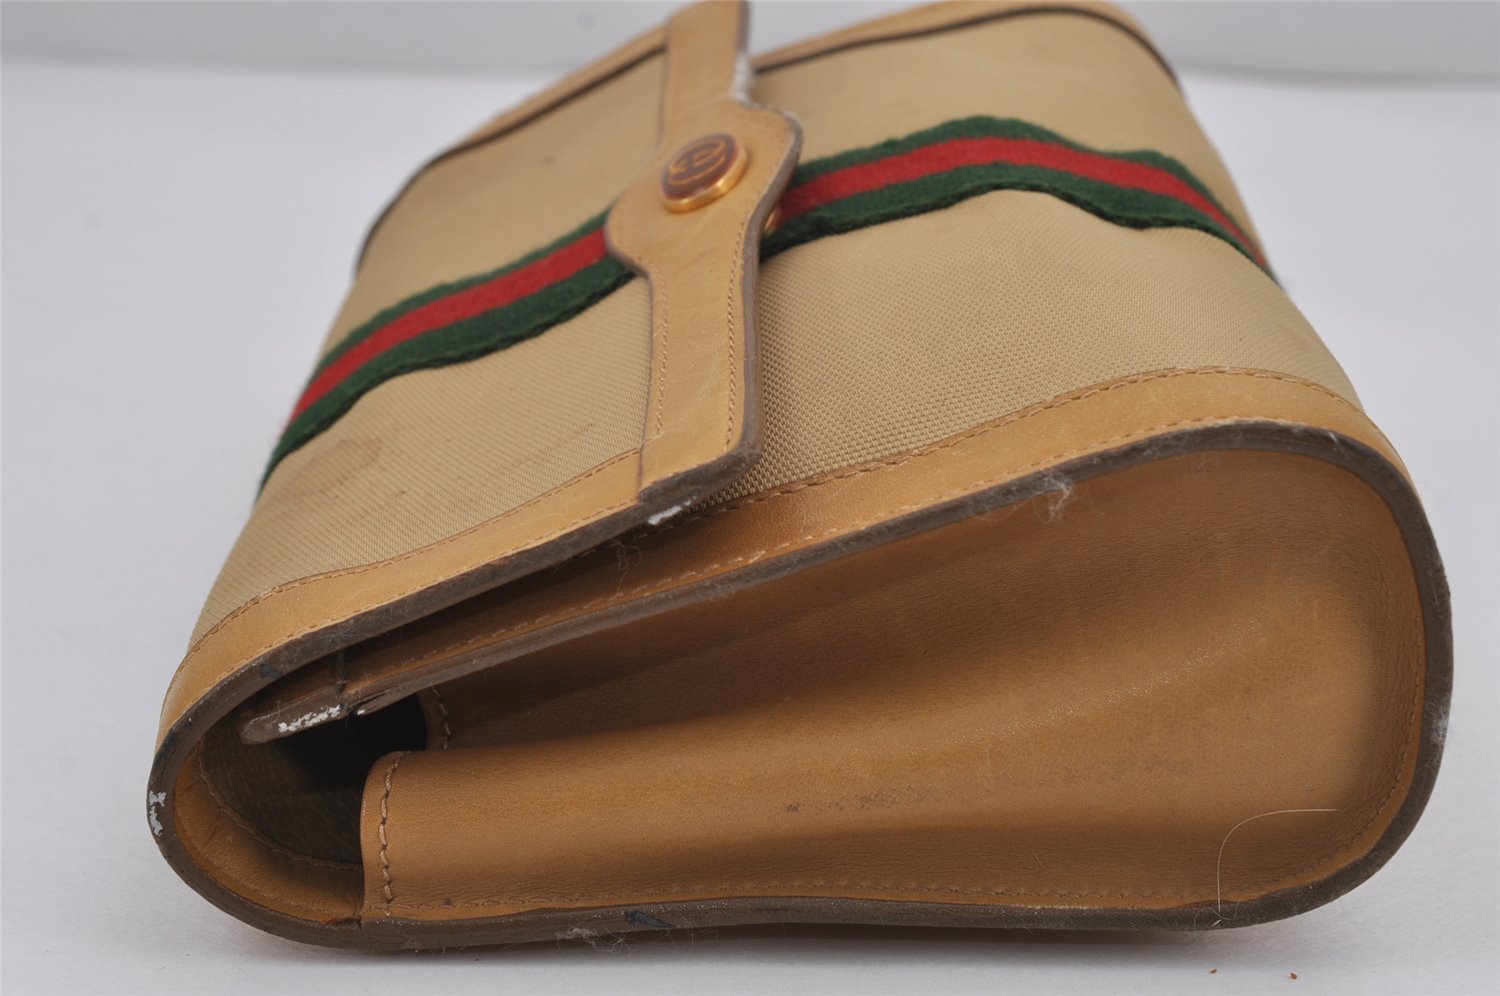 Authentic GUCCI Web Sherry Line Clutch Hand Bag Purse Canvas Leather Beige 9374J